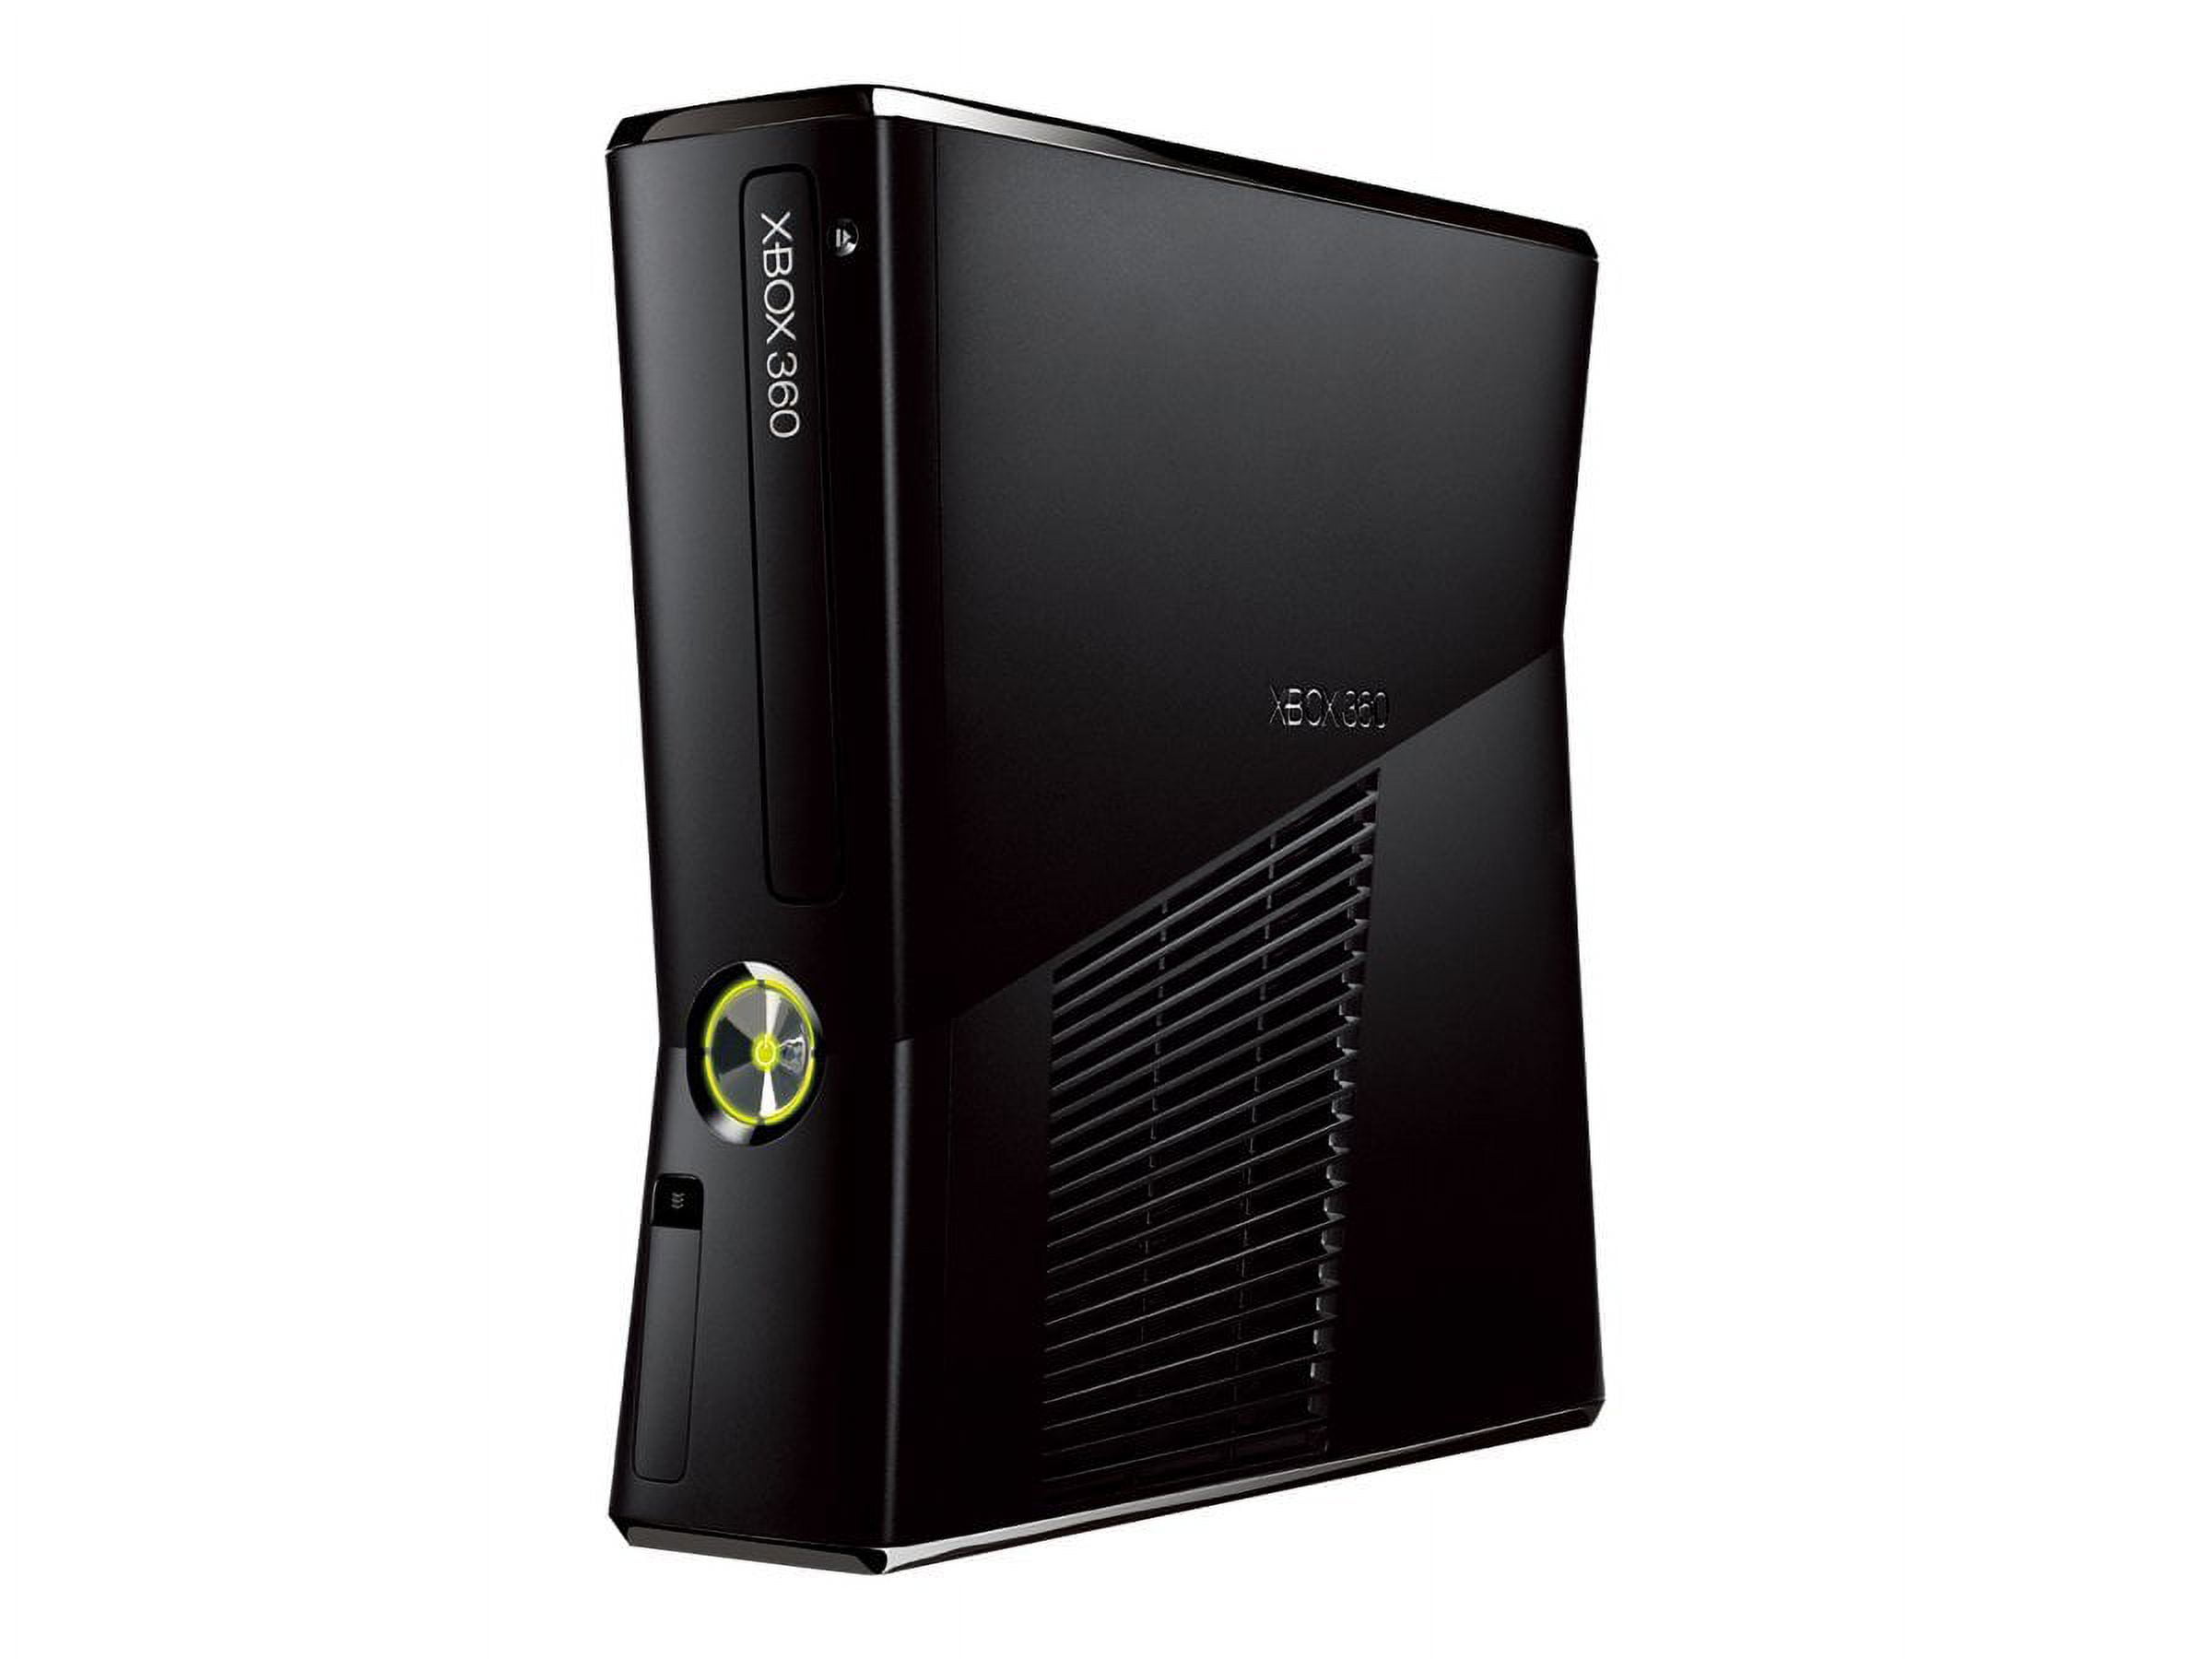 USADO - Xbox 360 Slim 250GB Black Piano - Microsoft